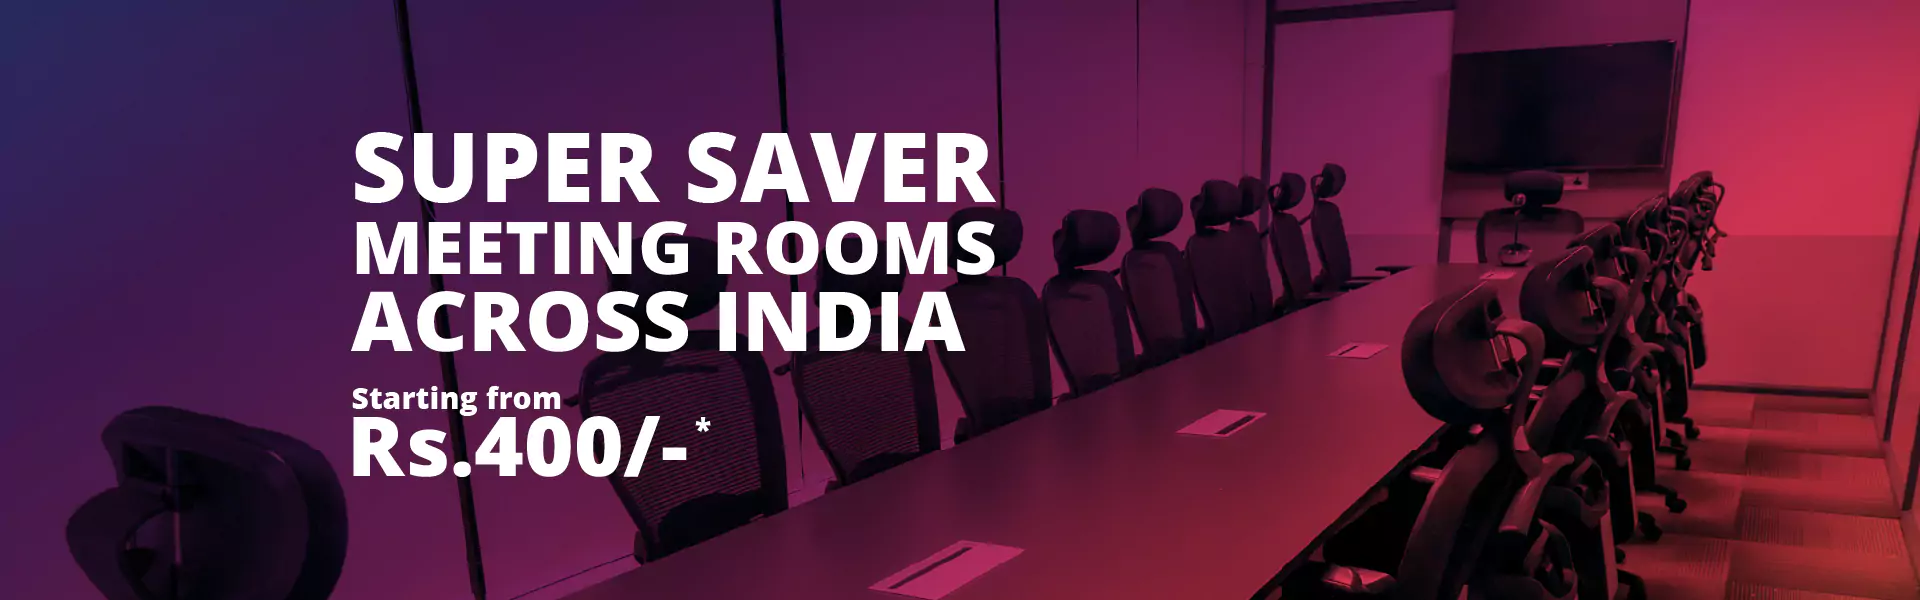 Super saver meeting rooms